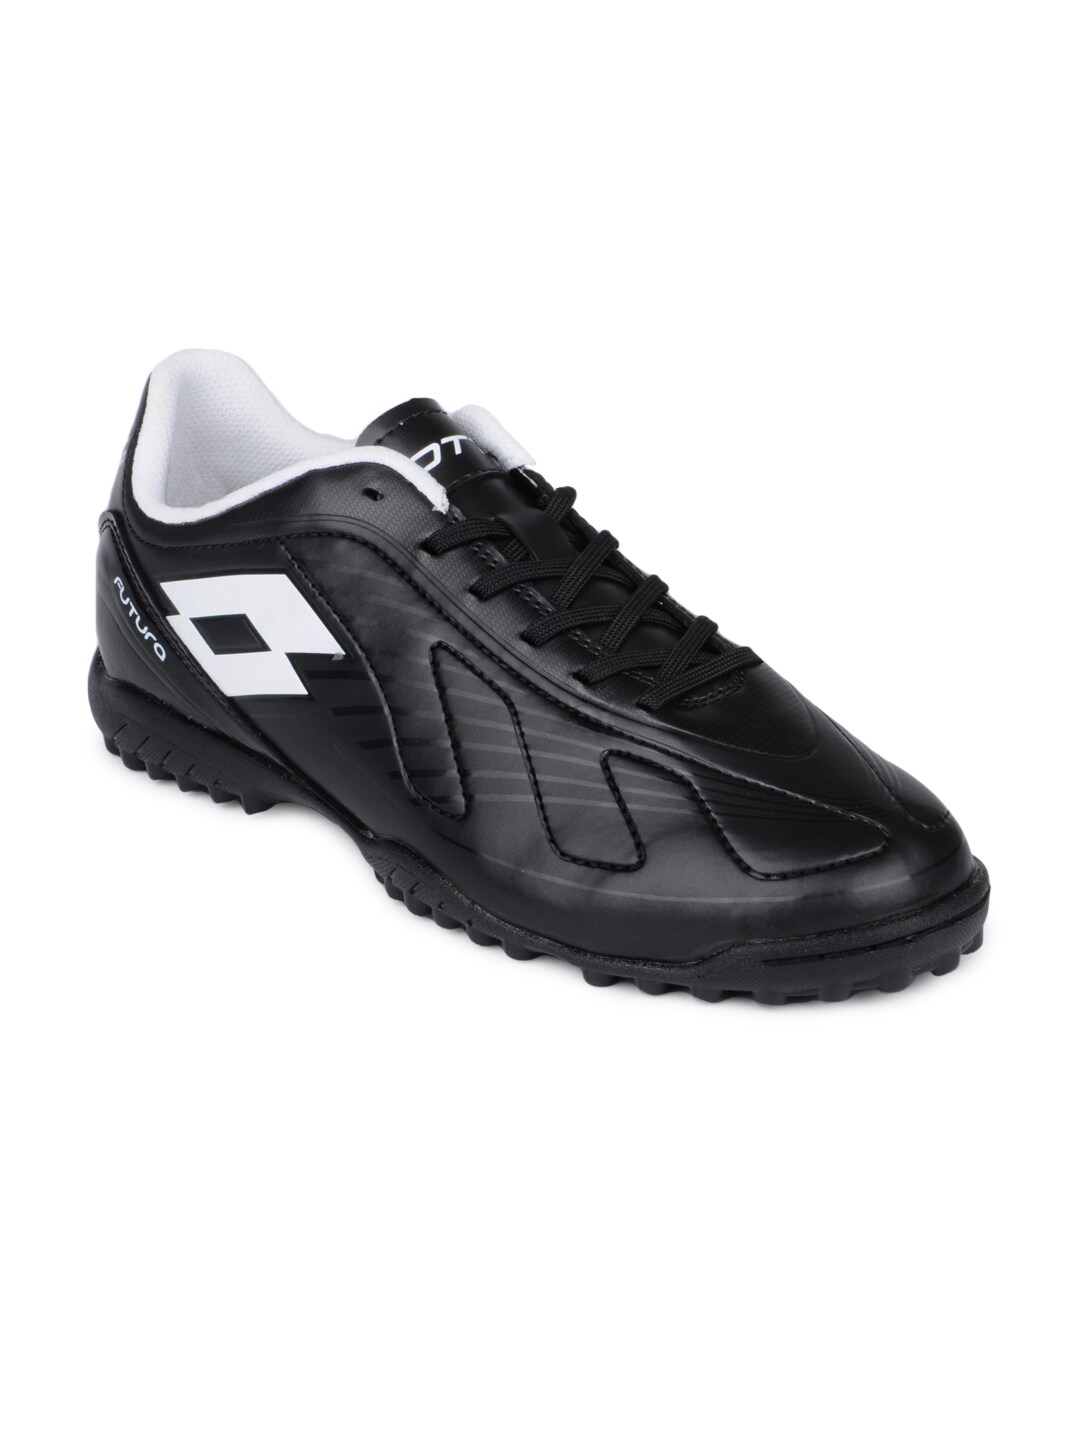 Lotto Men Black Futura Sports Shoes